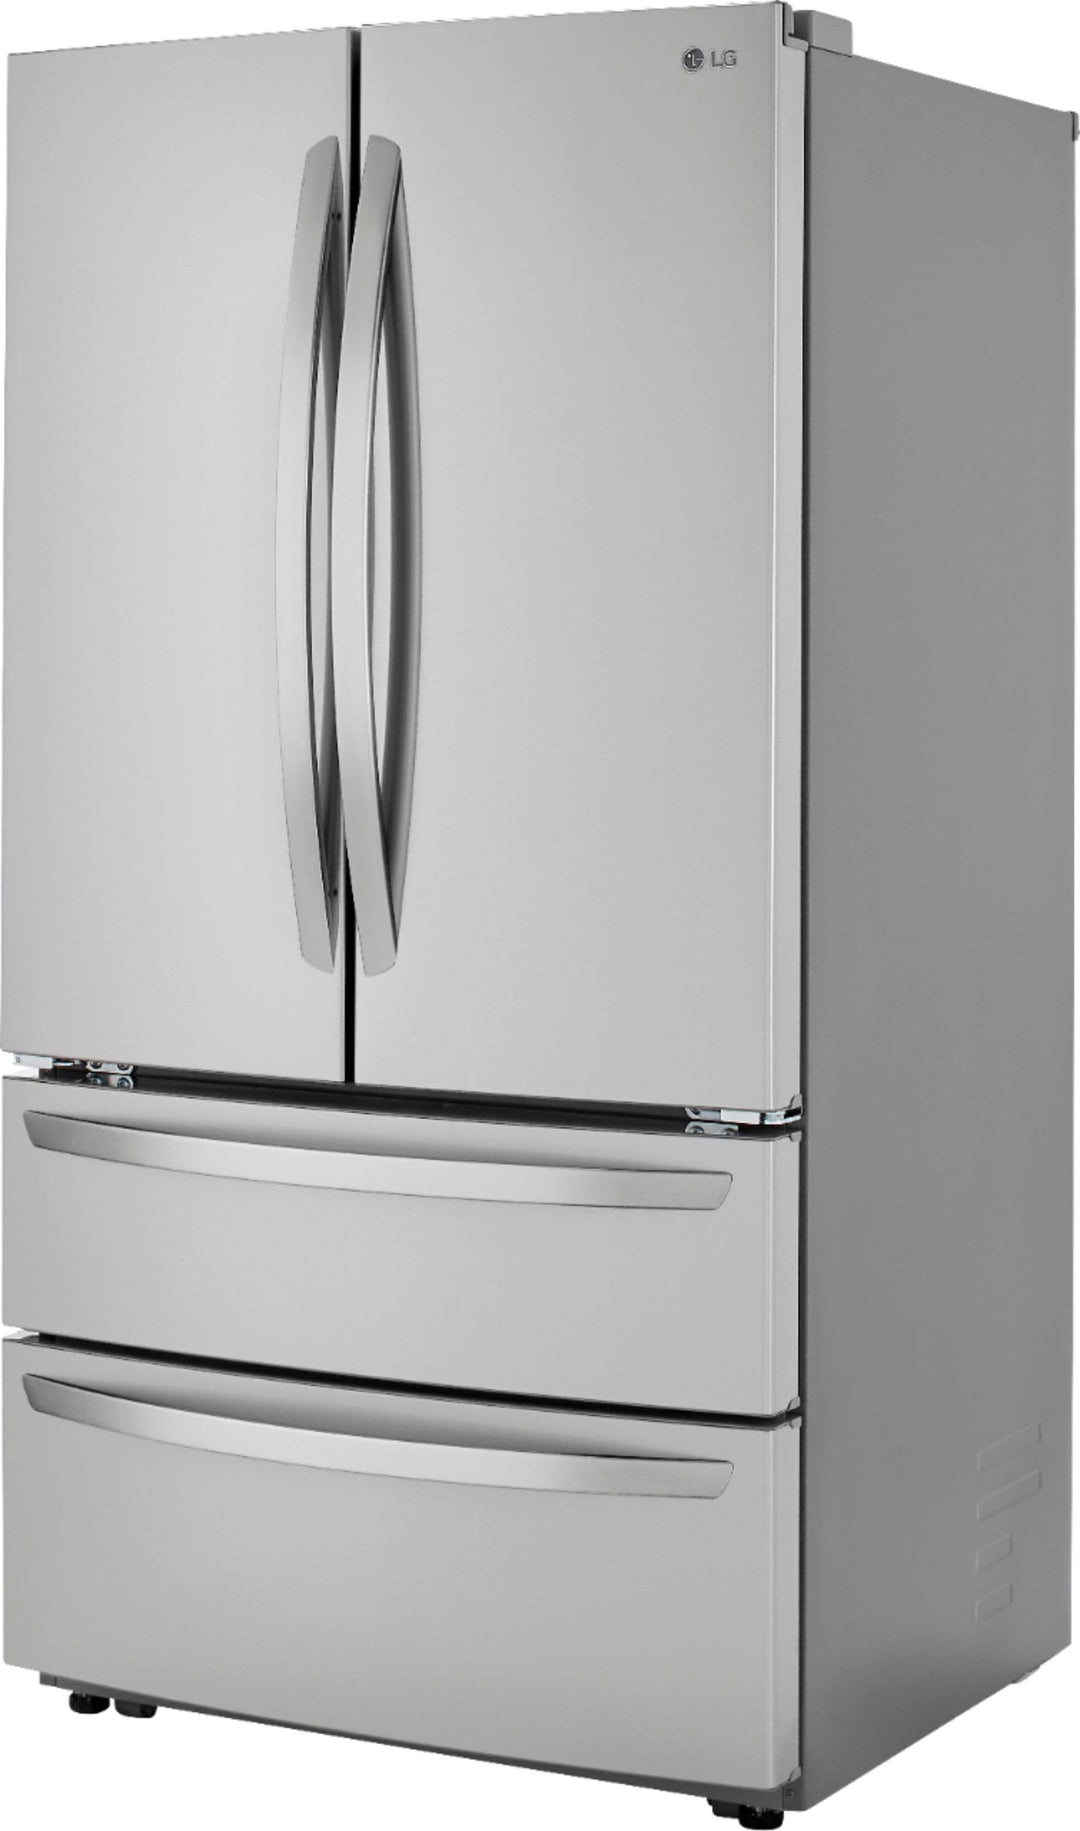 LG - 26.9 Cu. Ft. 4-Door French Door Refrigerator with Internal Water Dispenser and Icemaker - Stainless steel_2